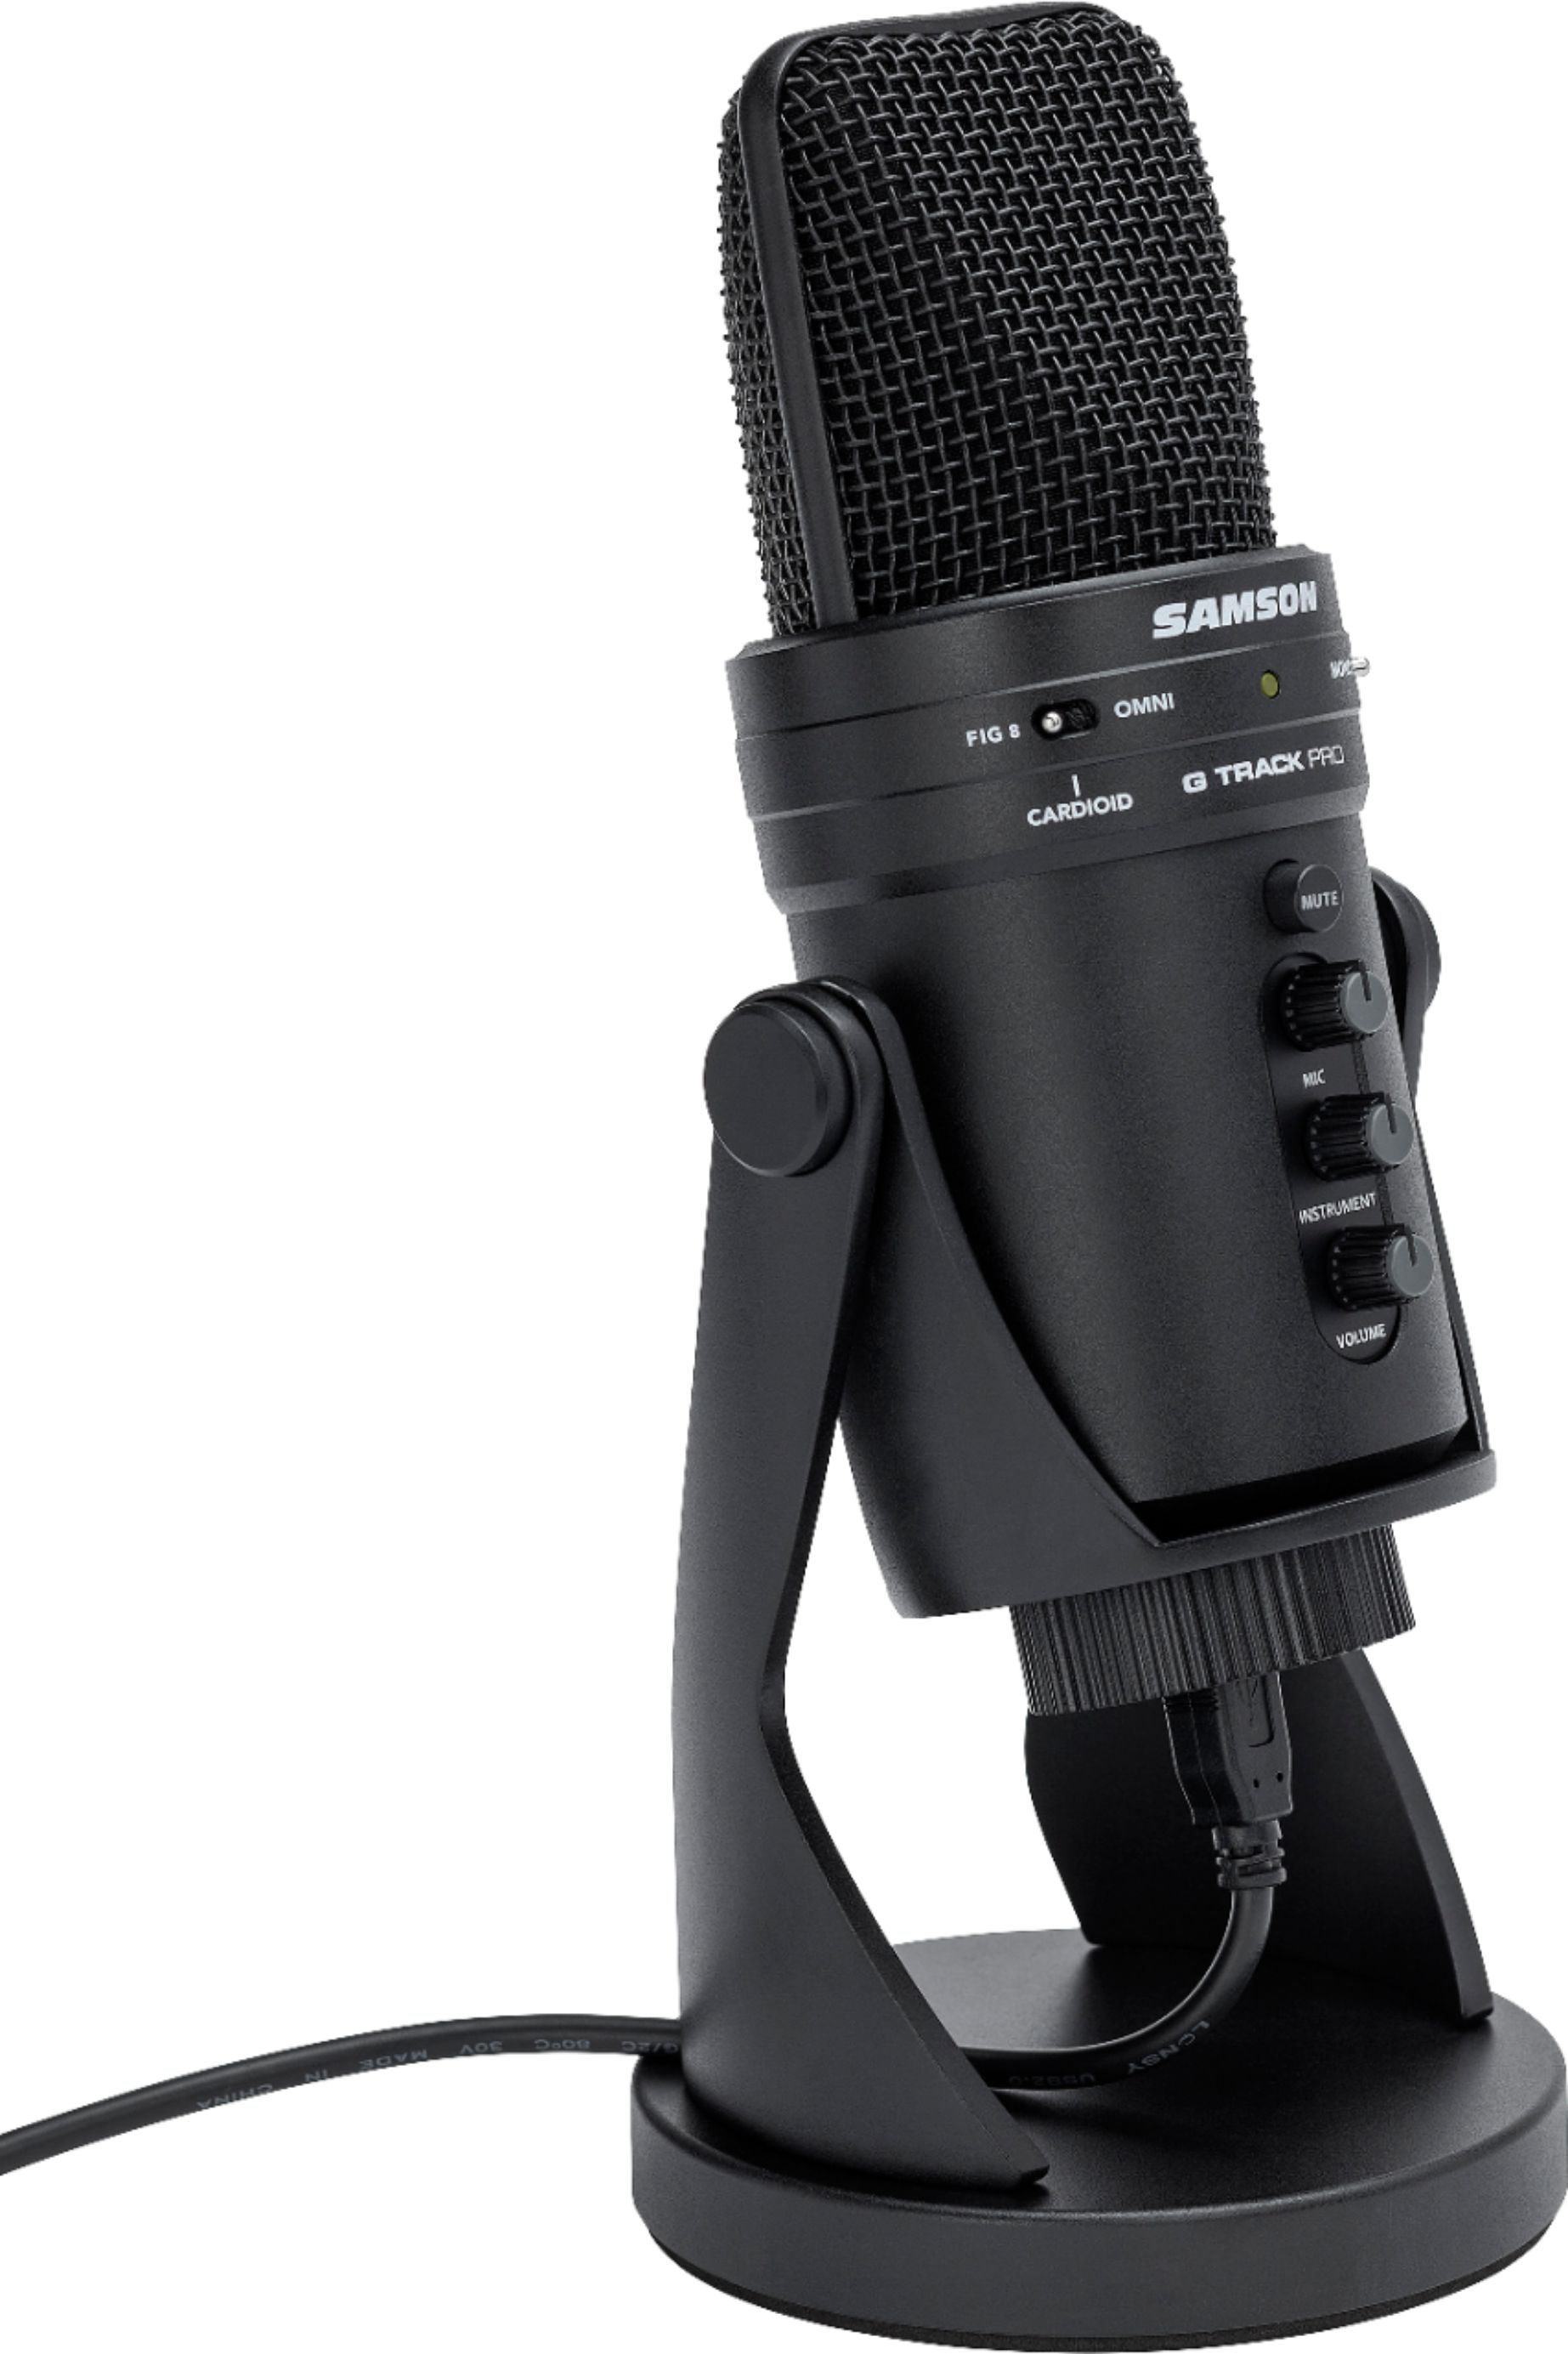 Angle View: Samson - G-Track Pro USB Microphone